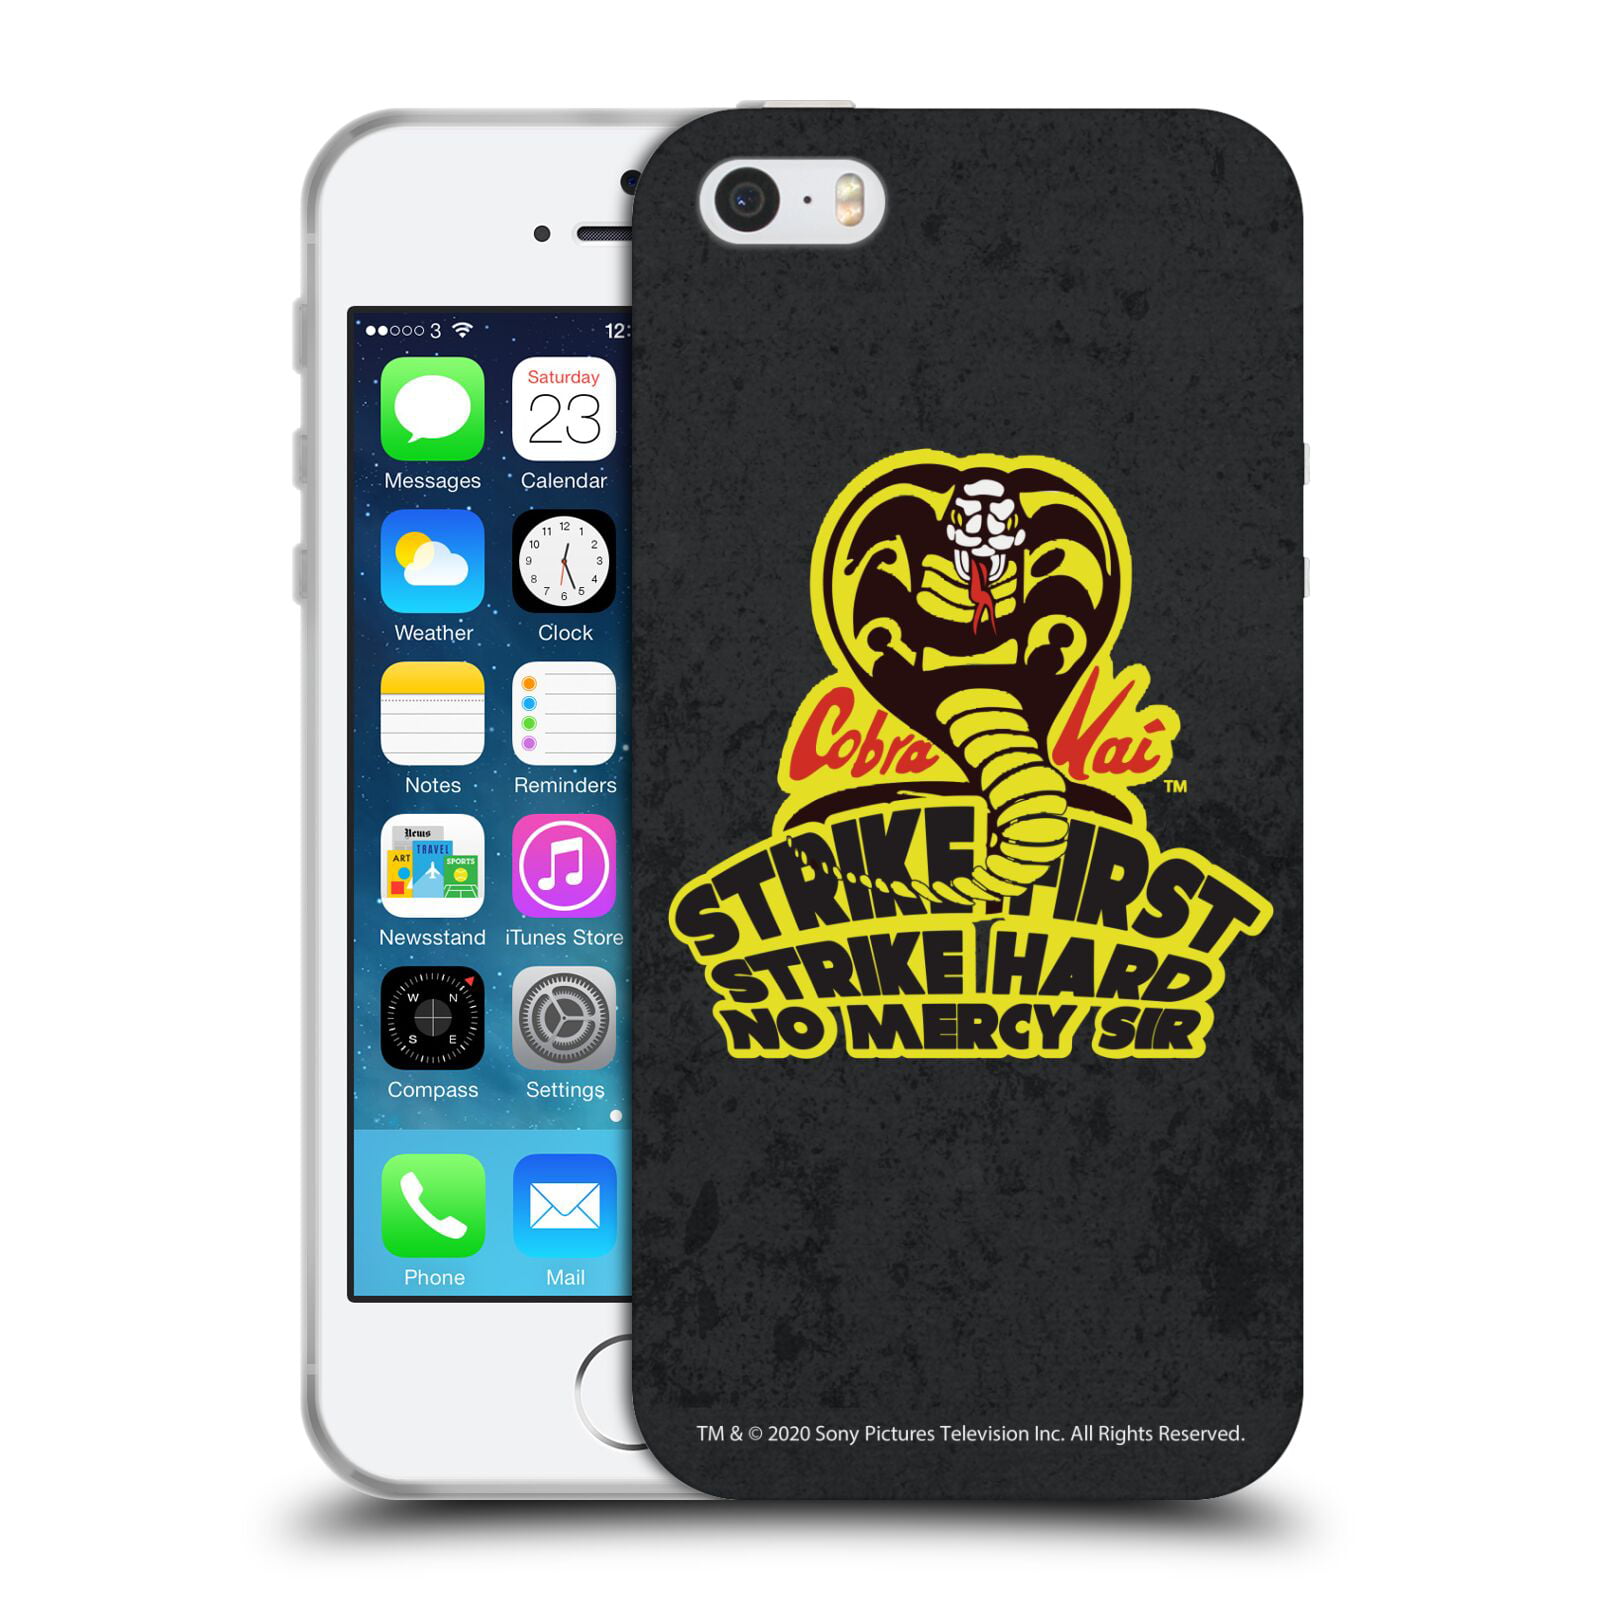 Zuidoost Goot Sta op Head Case Designs Officially Licensed Cobra Kai Graphics 2 Strike Hard Logo  Soft Gel Case Compatible with Apple iPhone 5 / 5s / iPhone SE 2016 -  Walmart.com